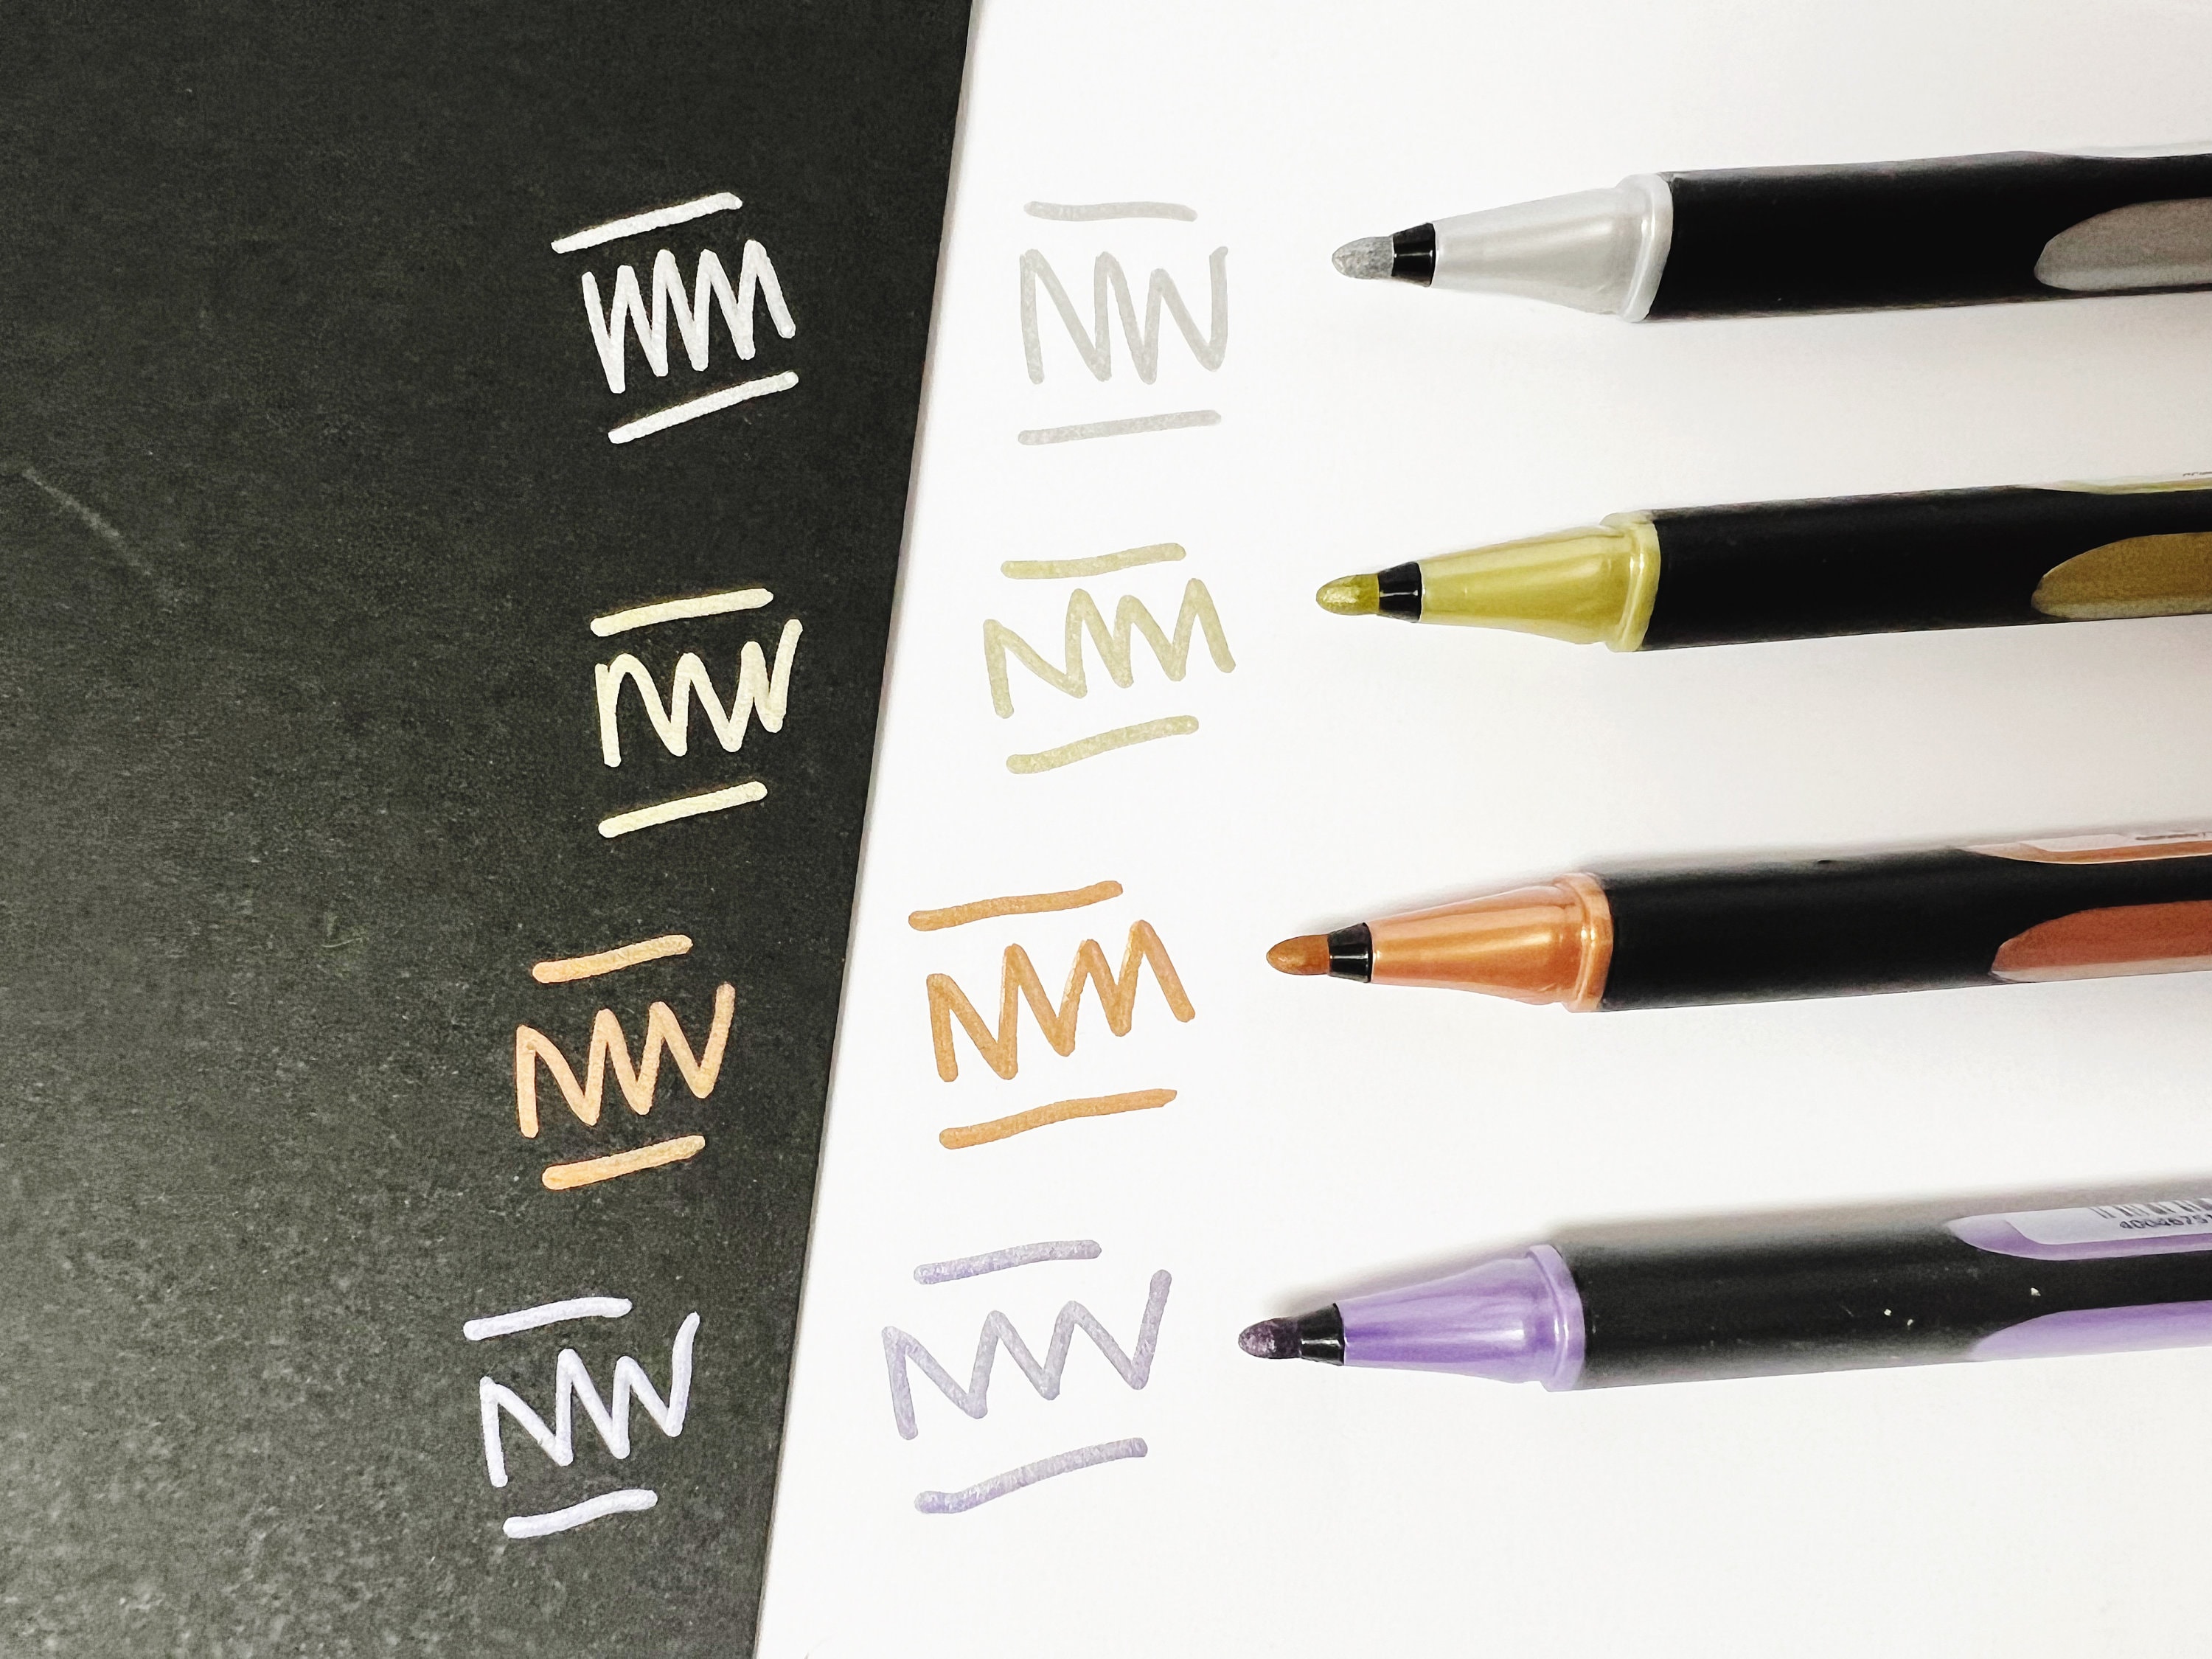 12 Colors Self Contour Metallic Markers, Permanent Marker Craft Pens Markers  For Gift Card, Rock Painting, Scrapbook, Scrapbook, Metal